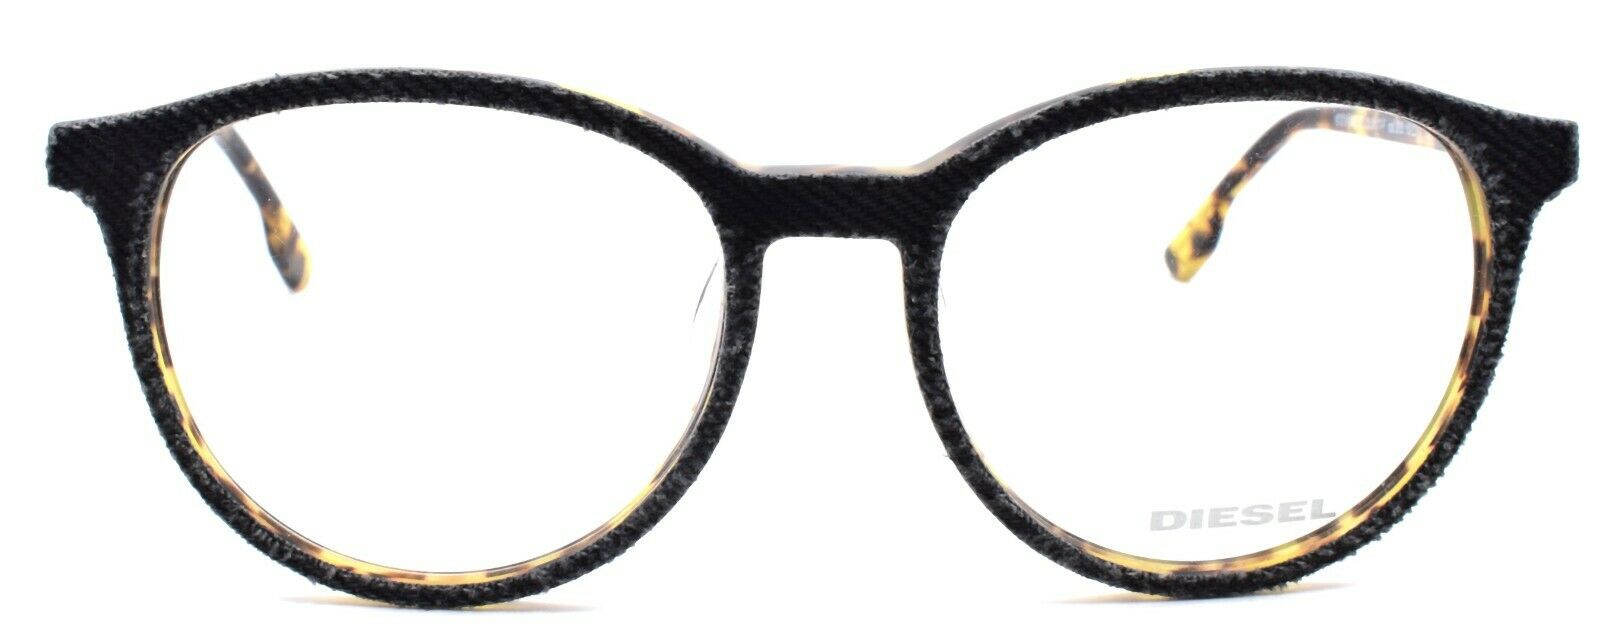 2-Diesel DL5117-F 005 Women's Glasses Frames Asian Fit 52-17-150 Havana / Denim-664689645909-IKSpecs